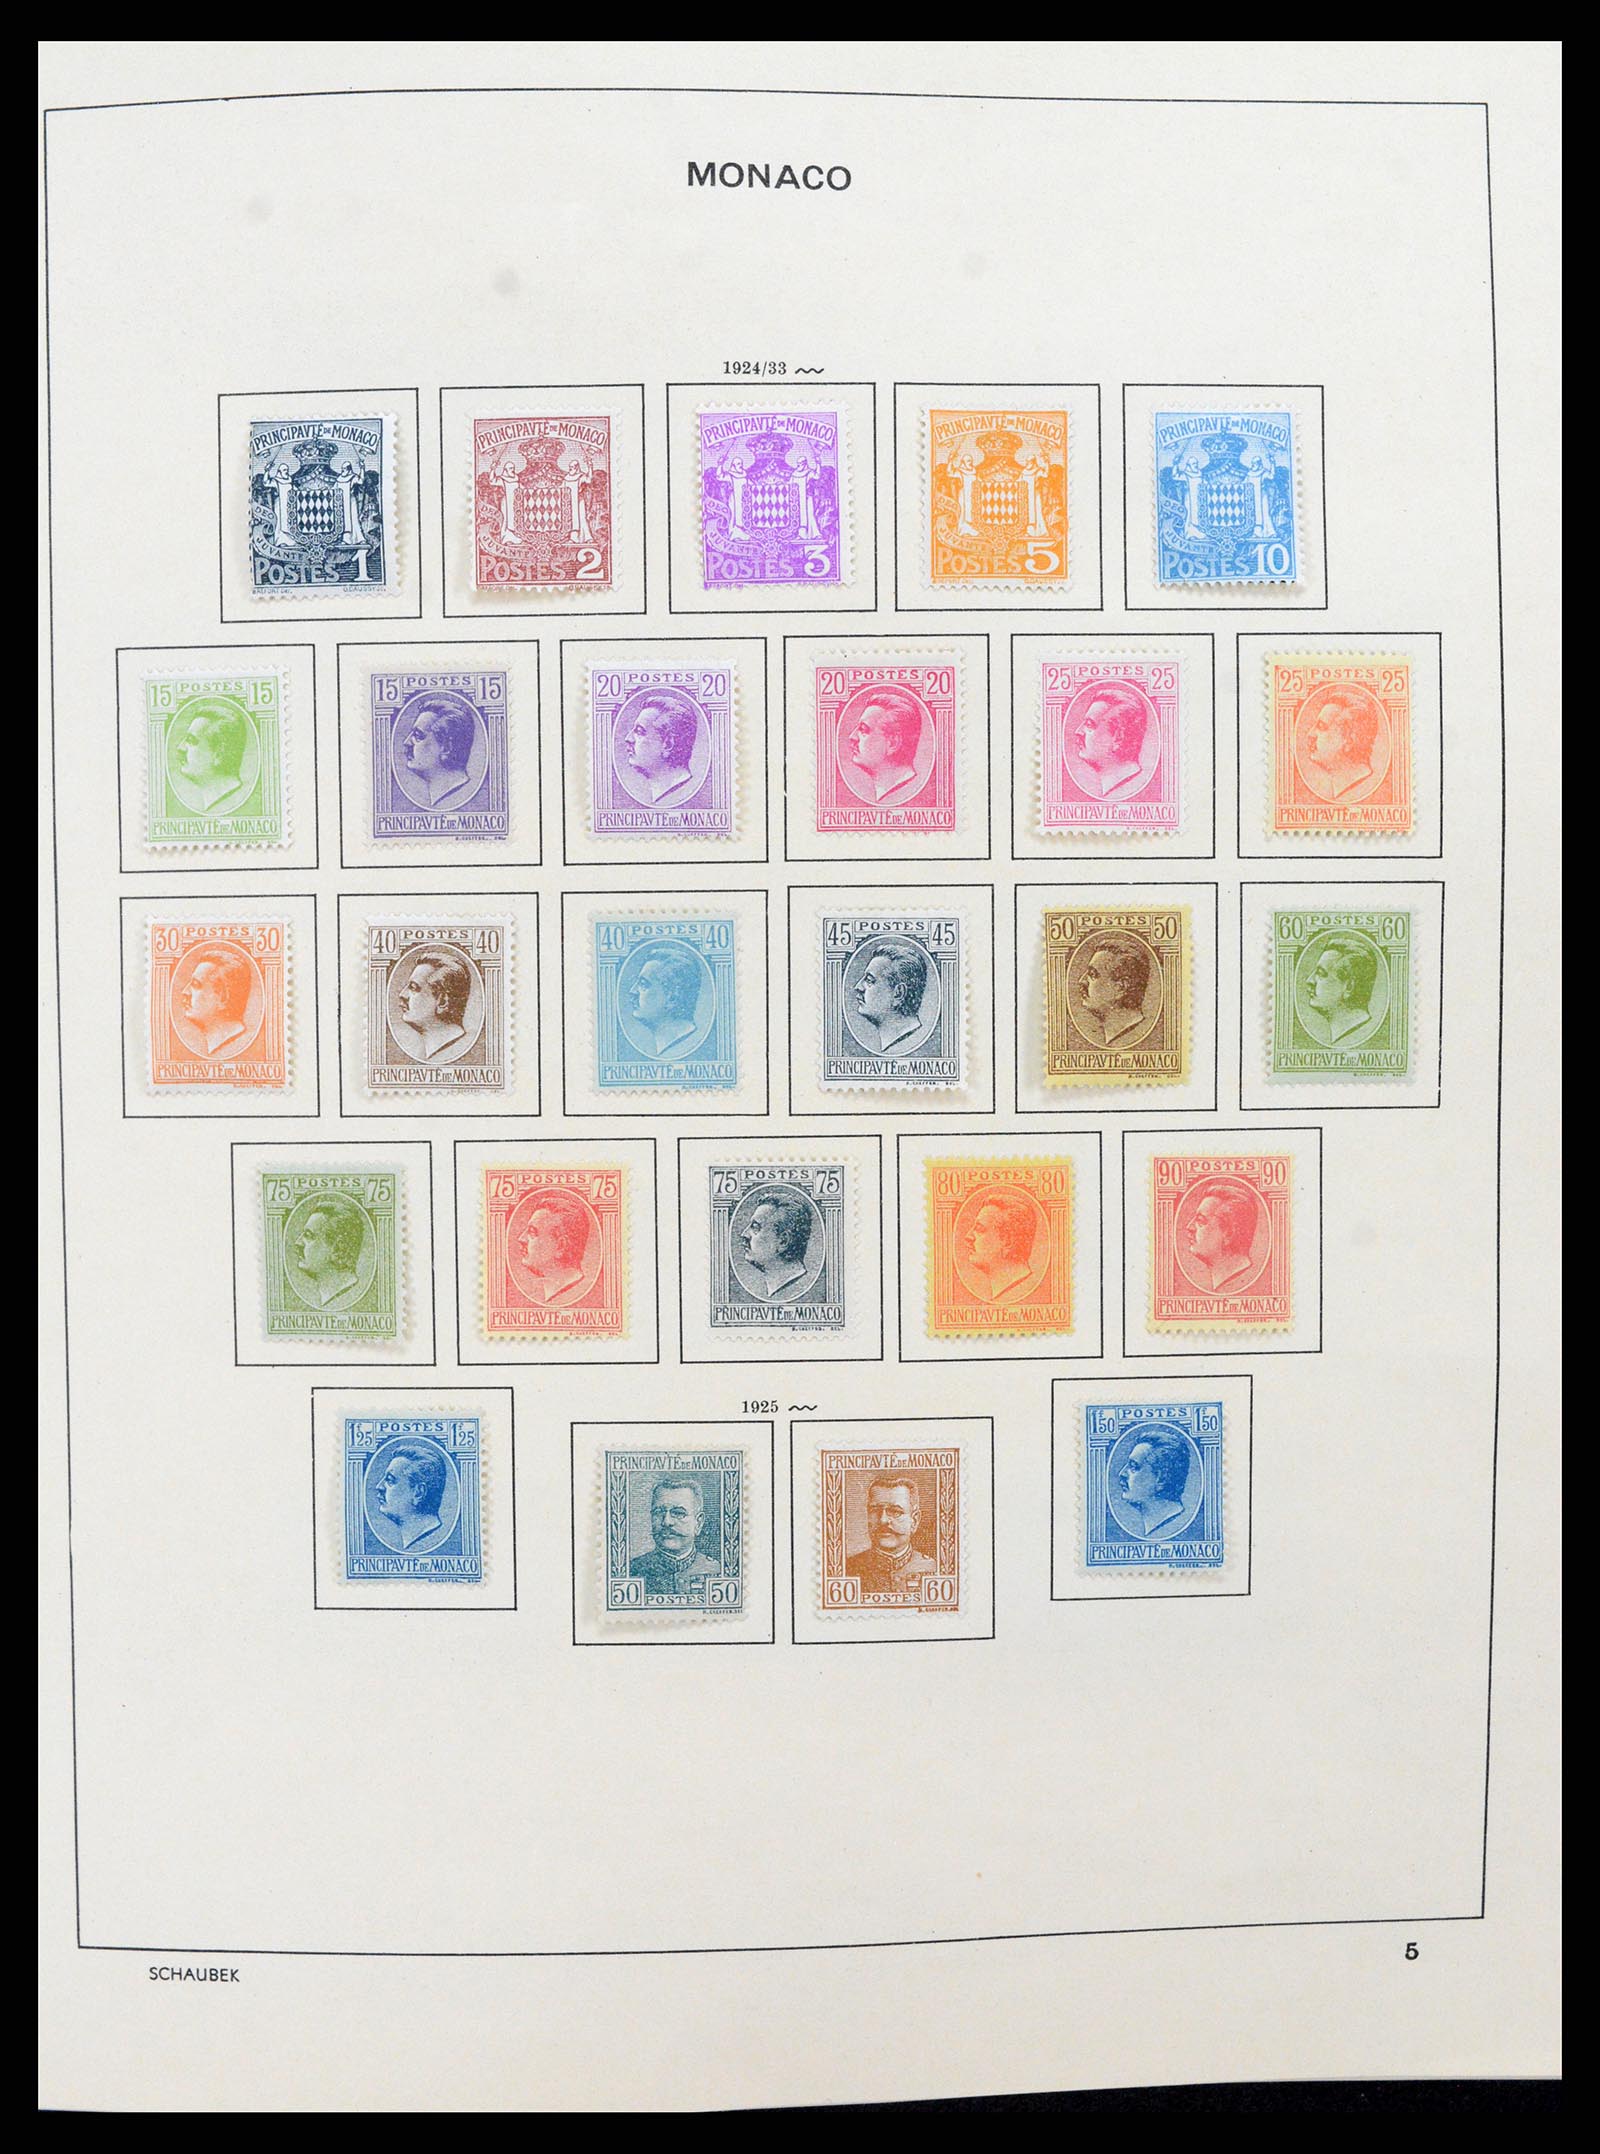 37570 005 - Stamp collection 37570 Monaco 1885-2013.